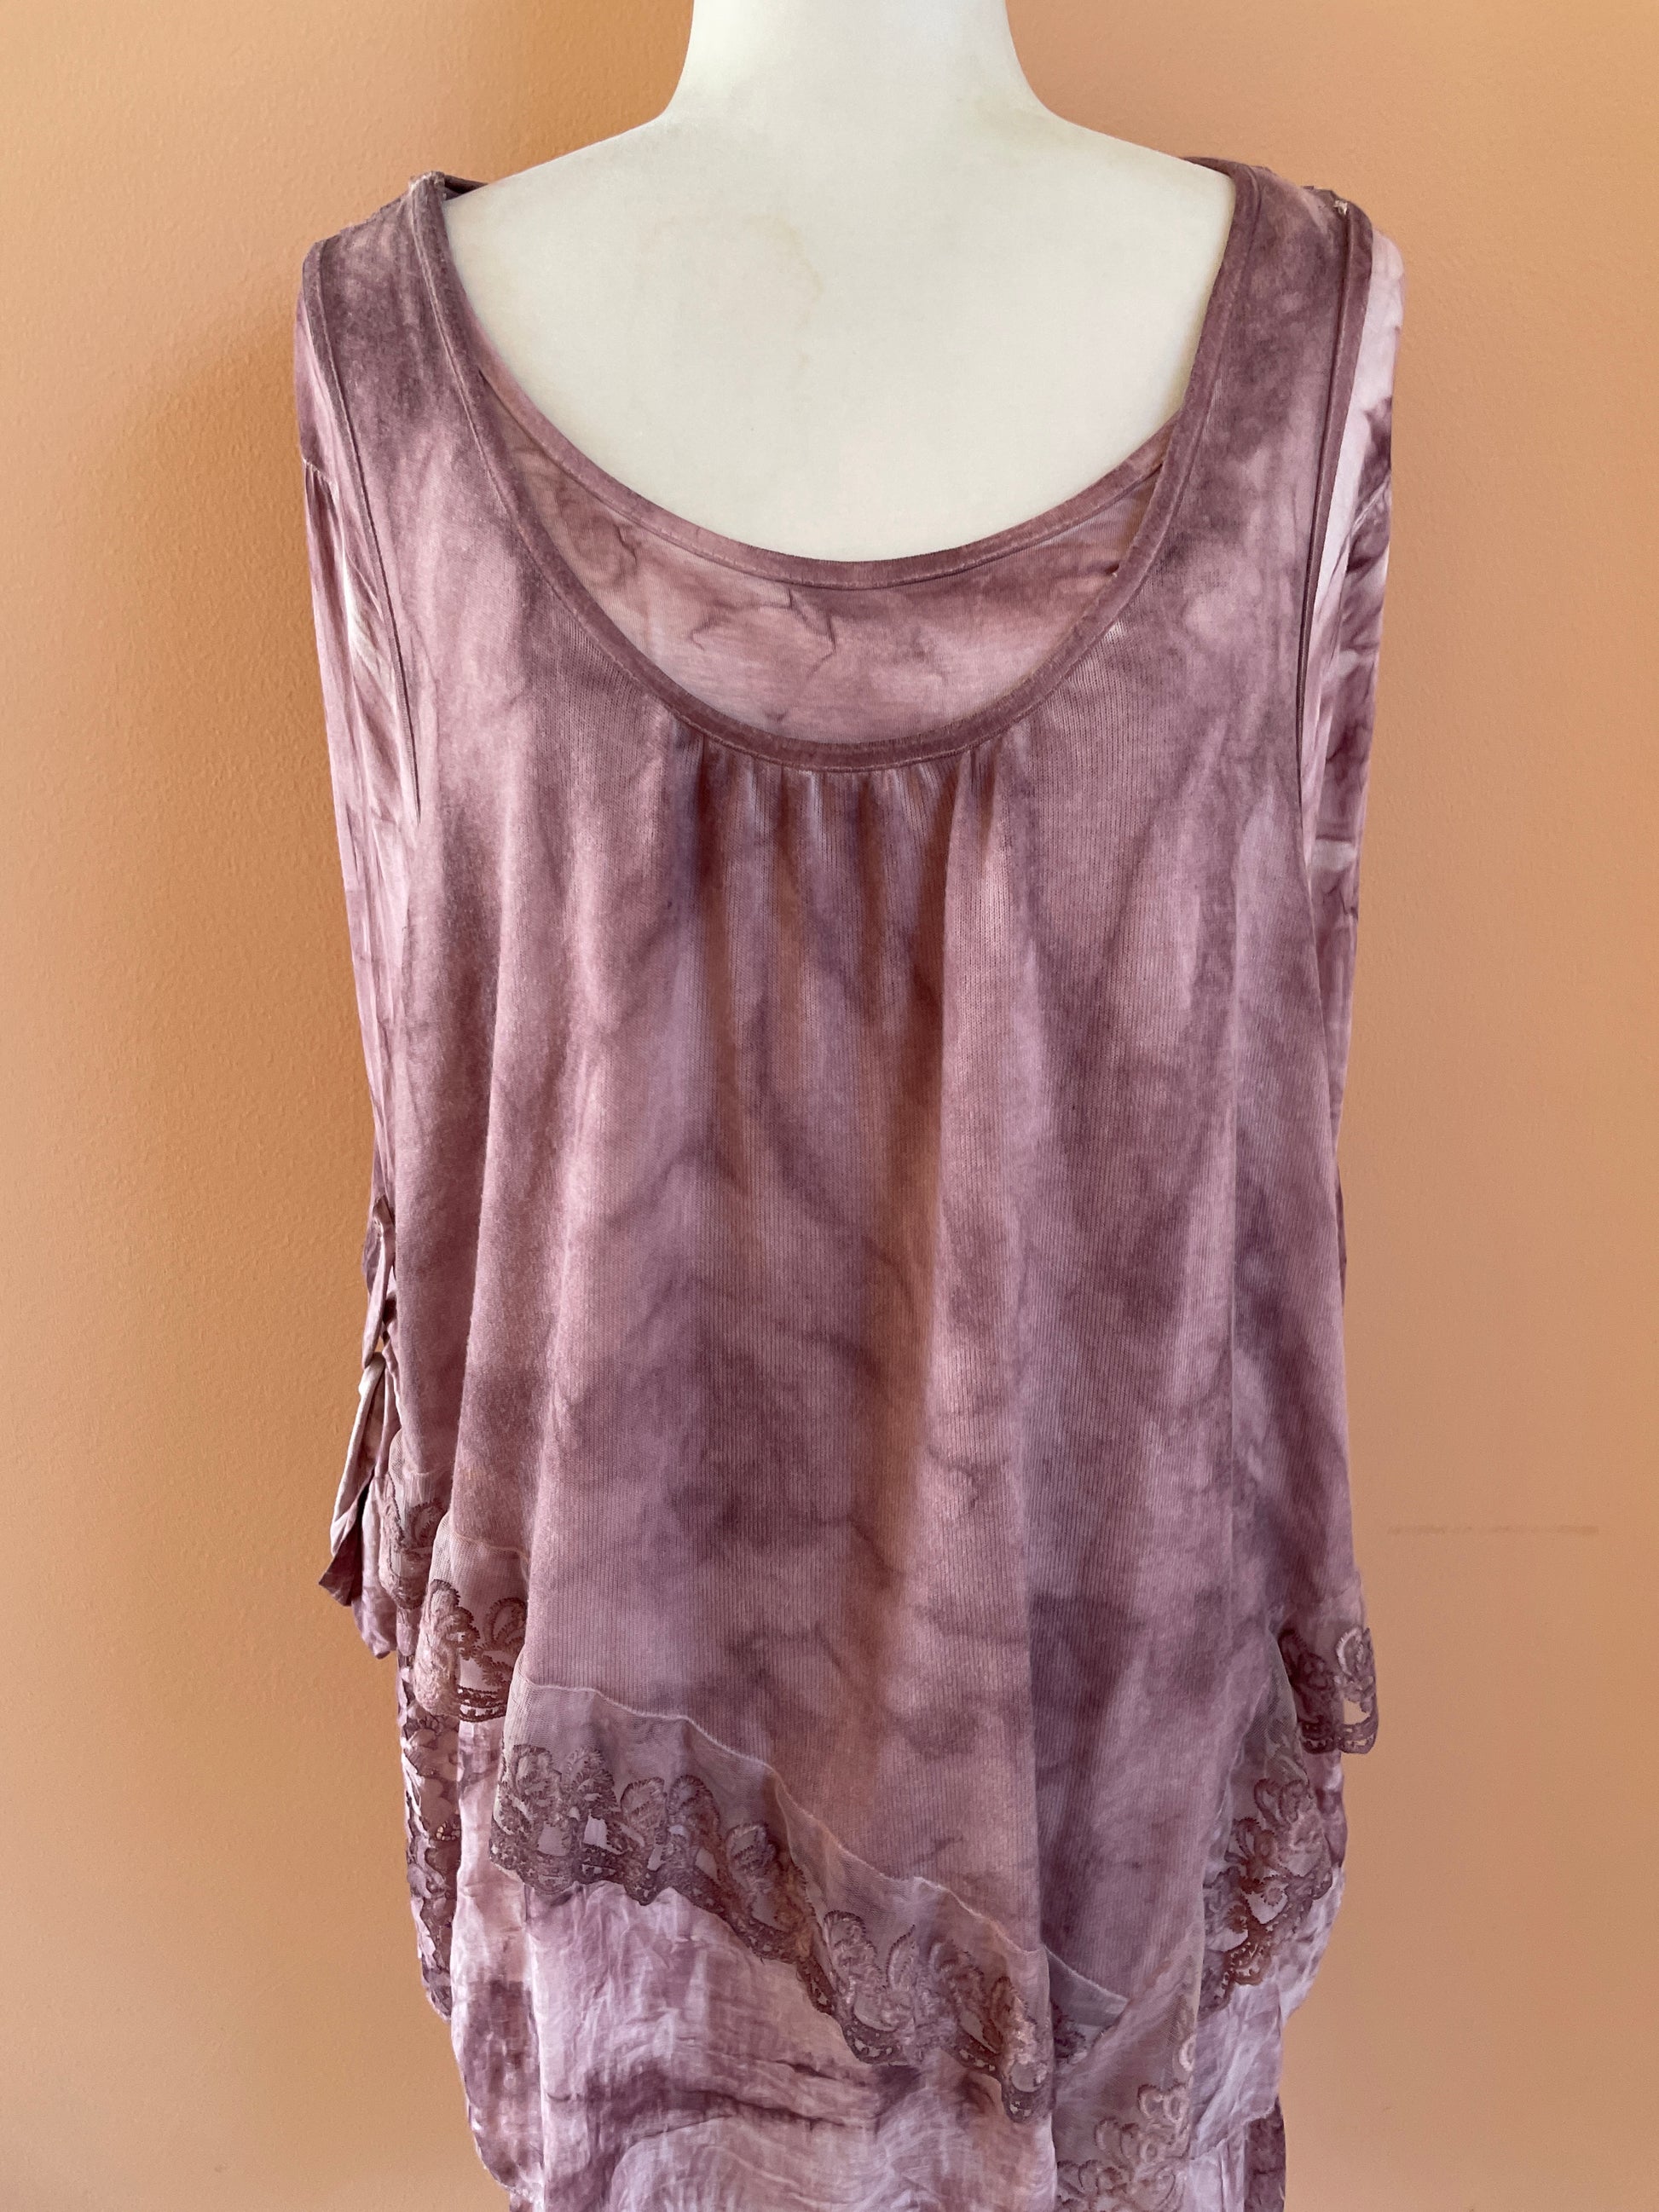  Made in Italy 2000s Tye Dye Draped Lace Lavender Boho Dress M